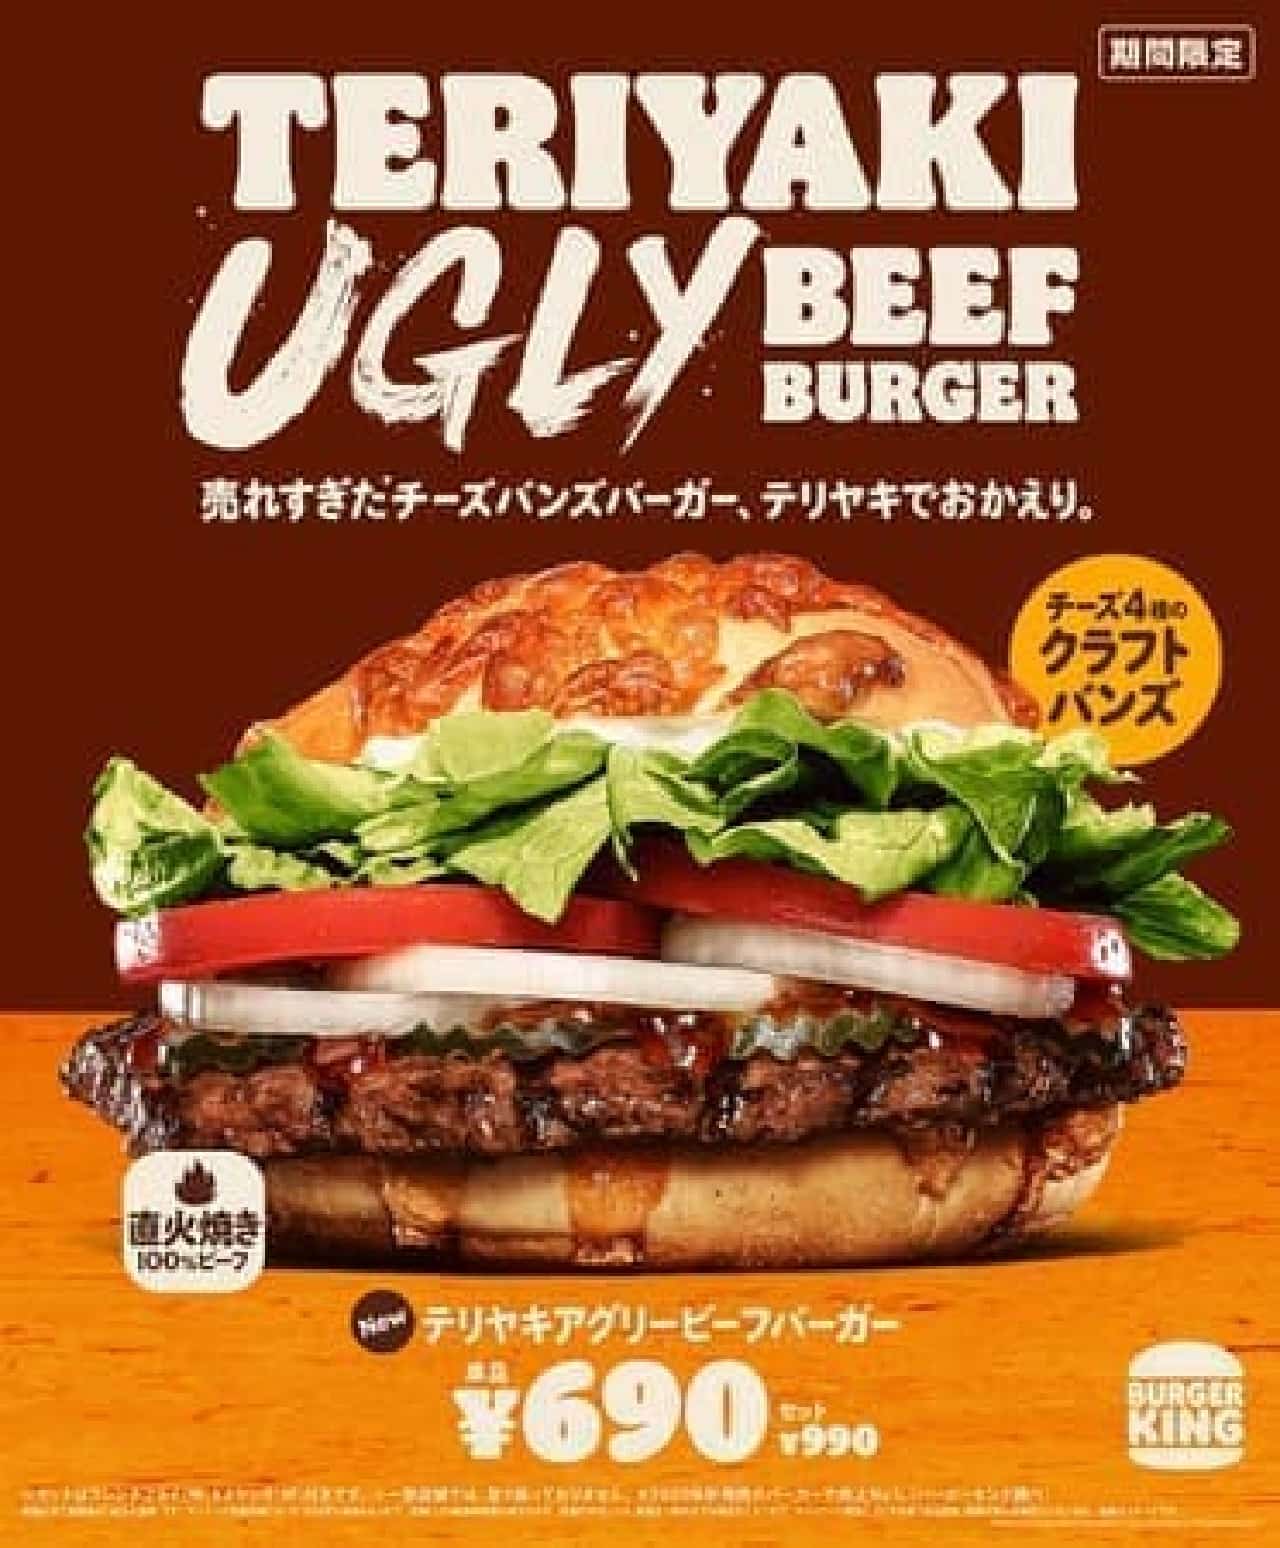 Burger King "Teriyaki Agri Beef Burger"